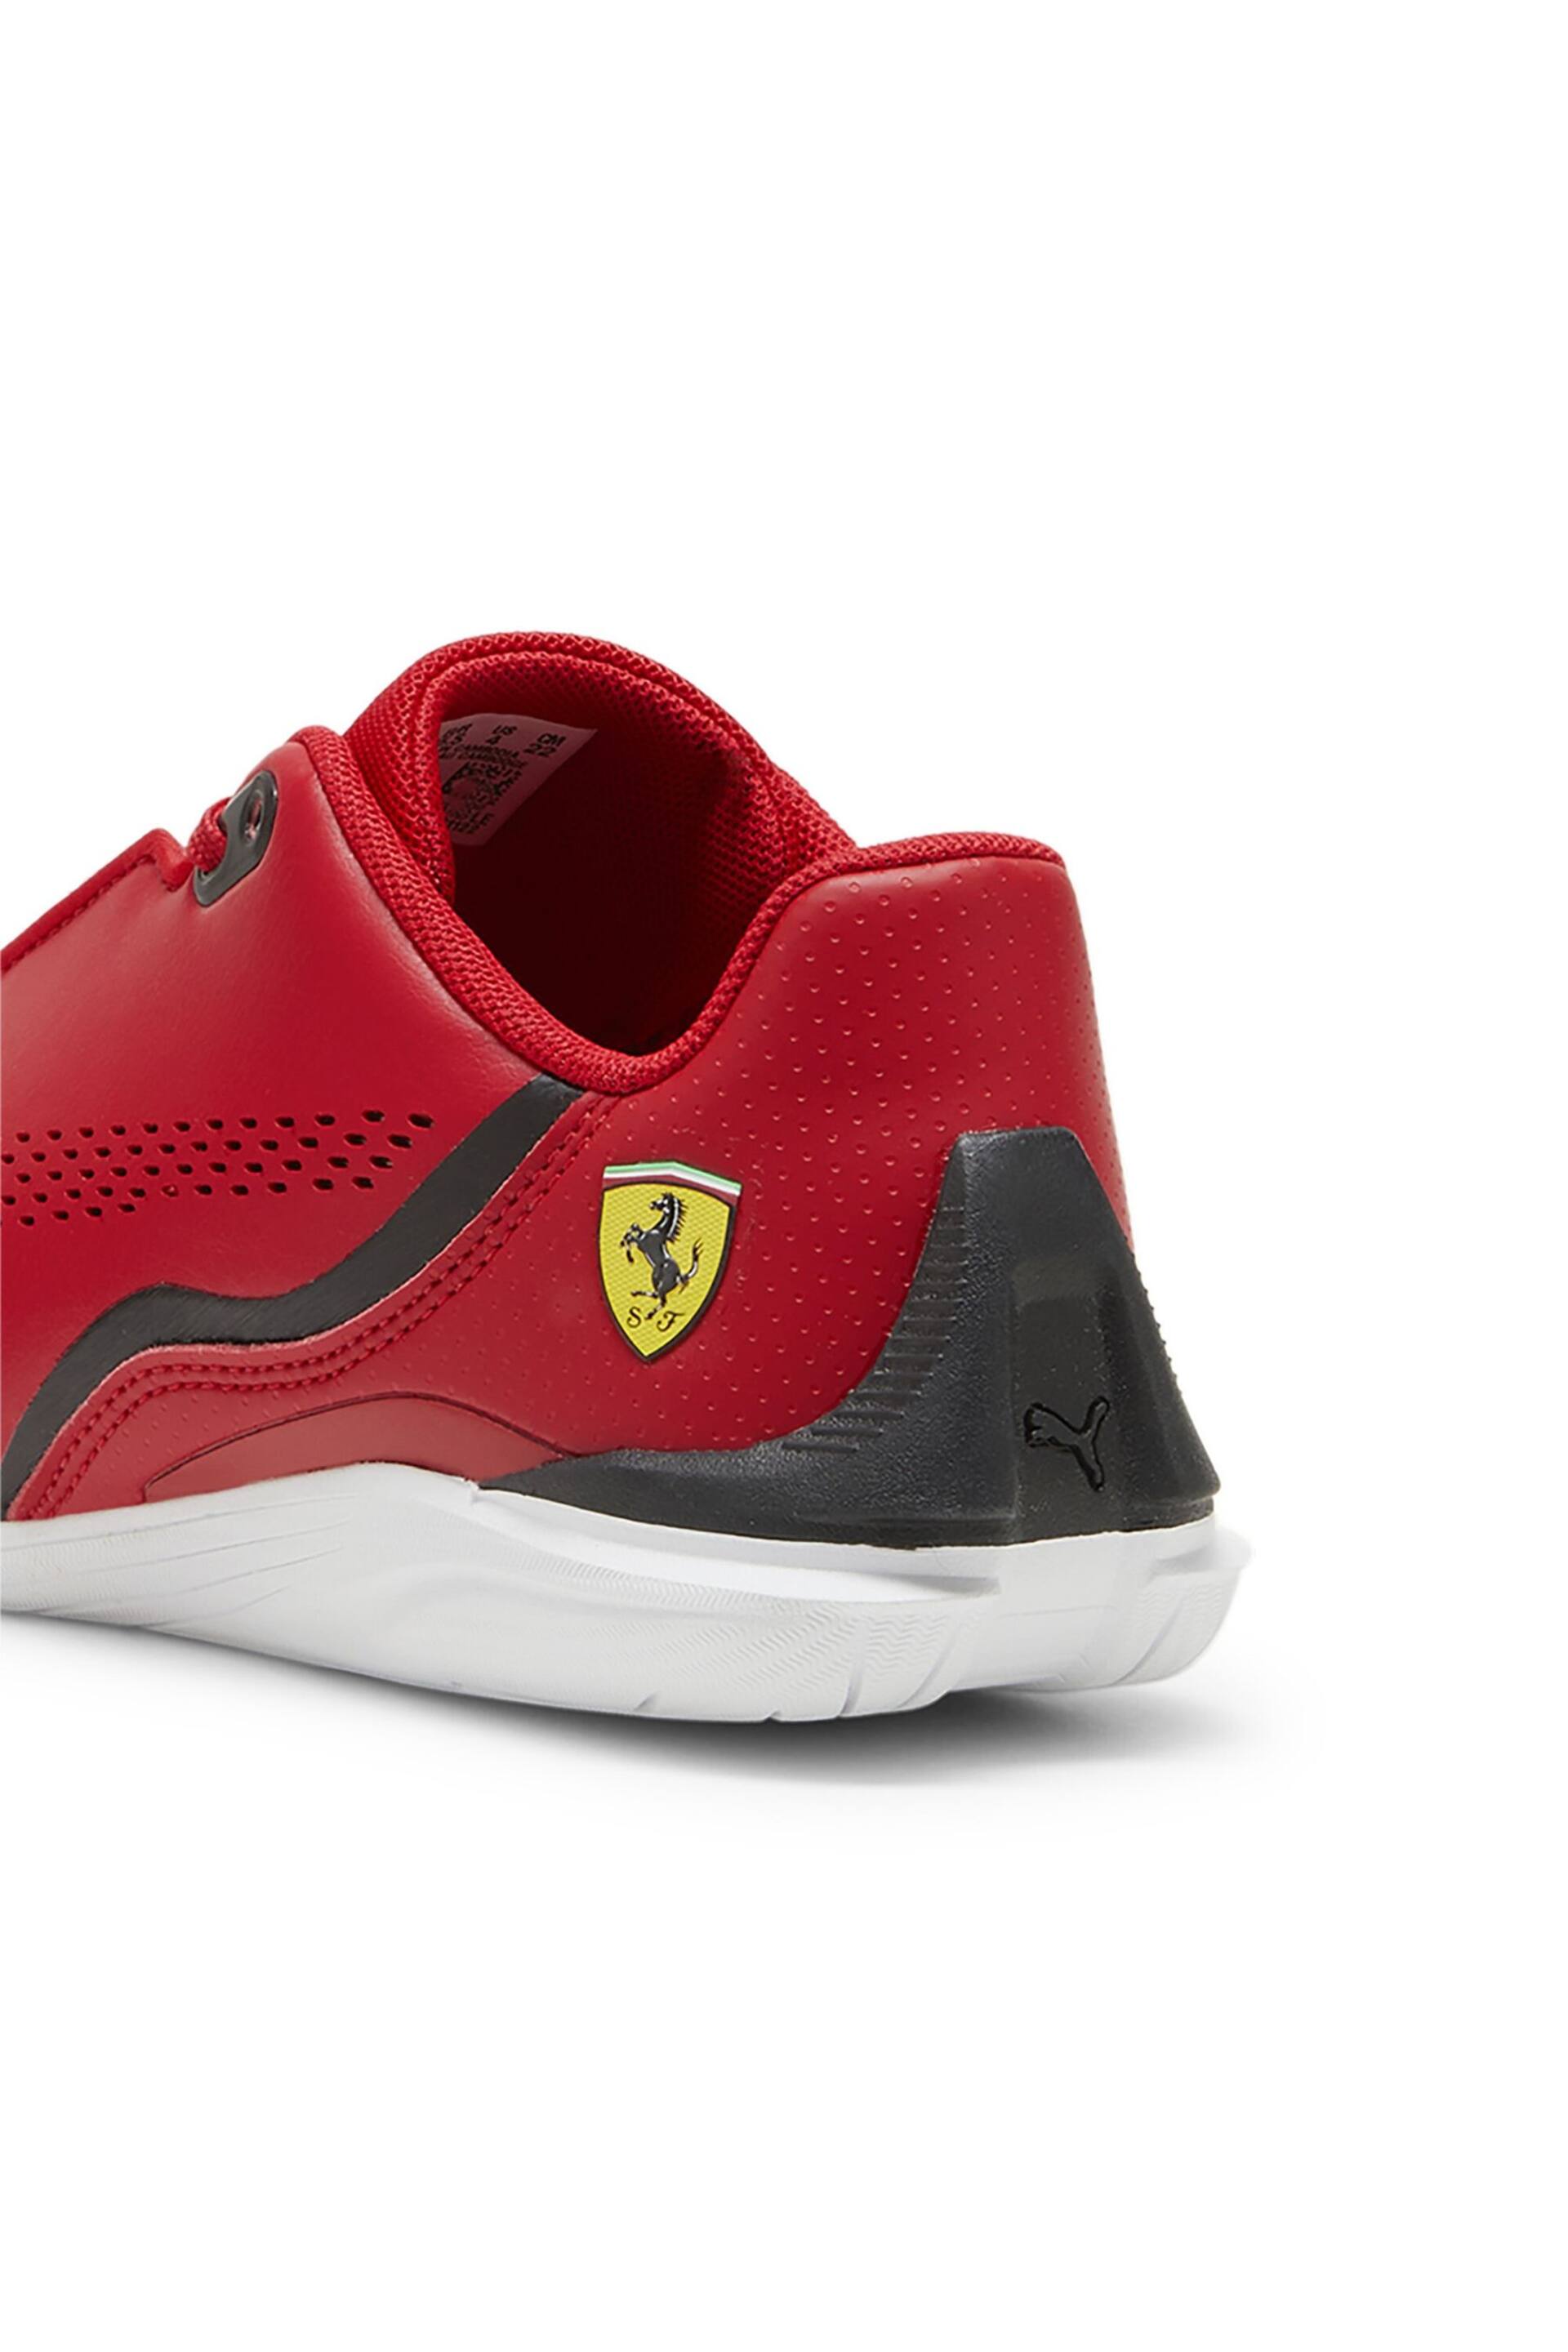 Puma Red Scuderia Ferrari Drift Cat Decima Motorsport Kids Shoes - Image 6 of 6